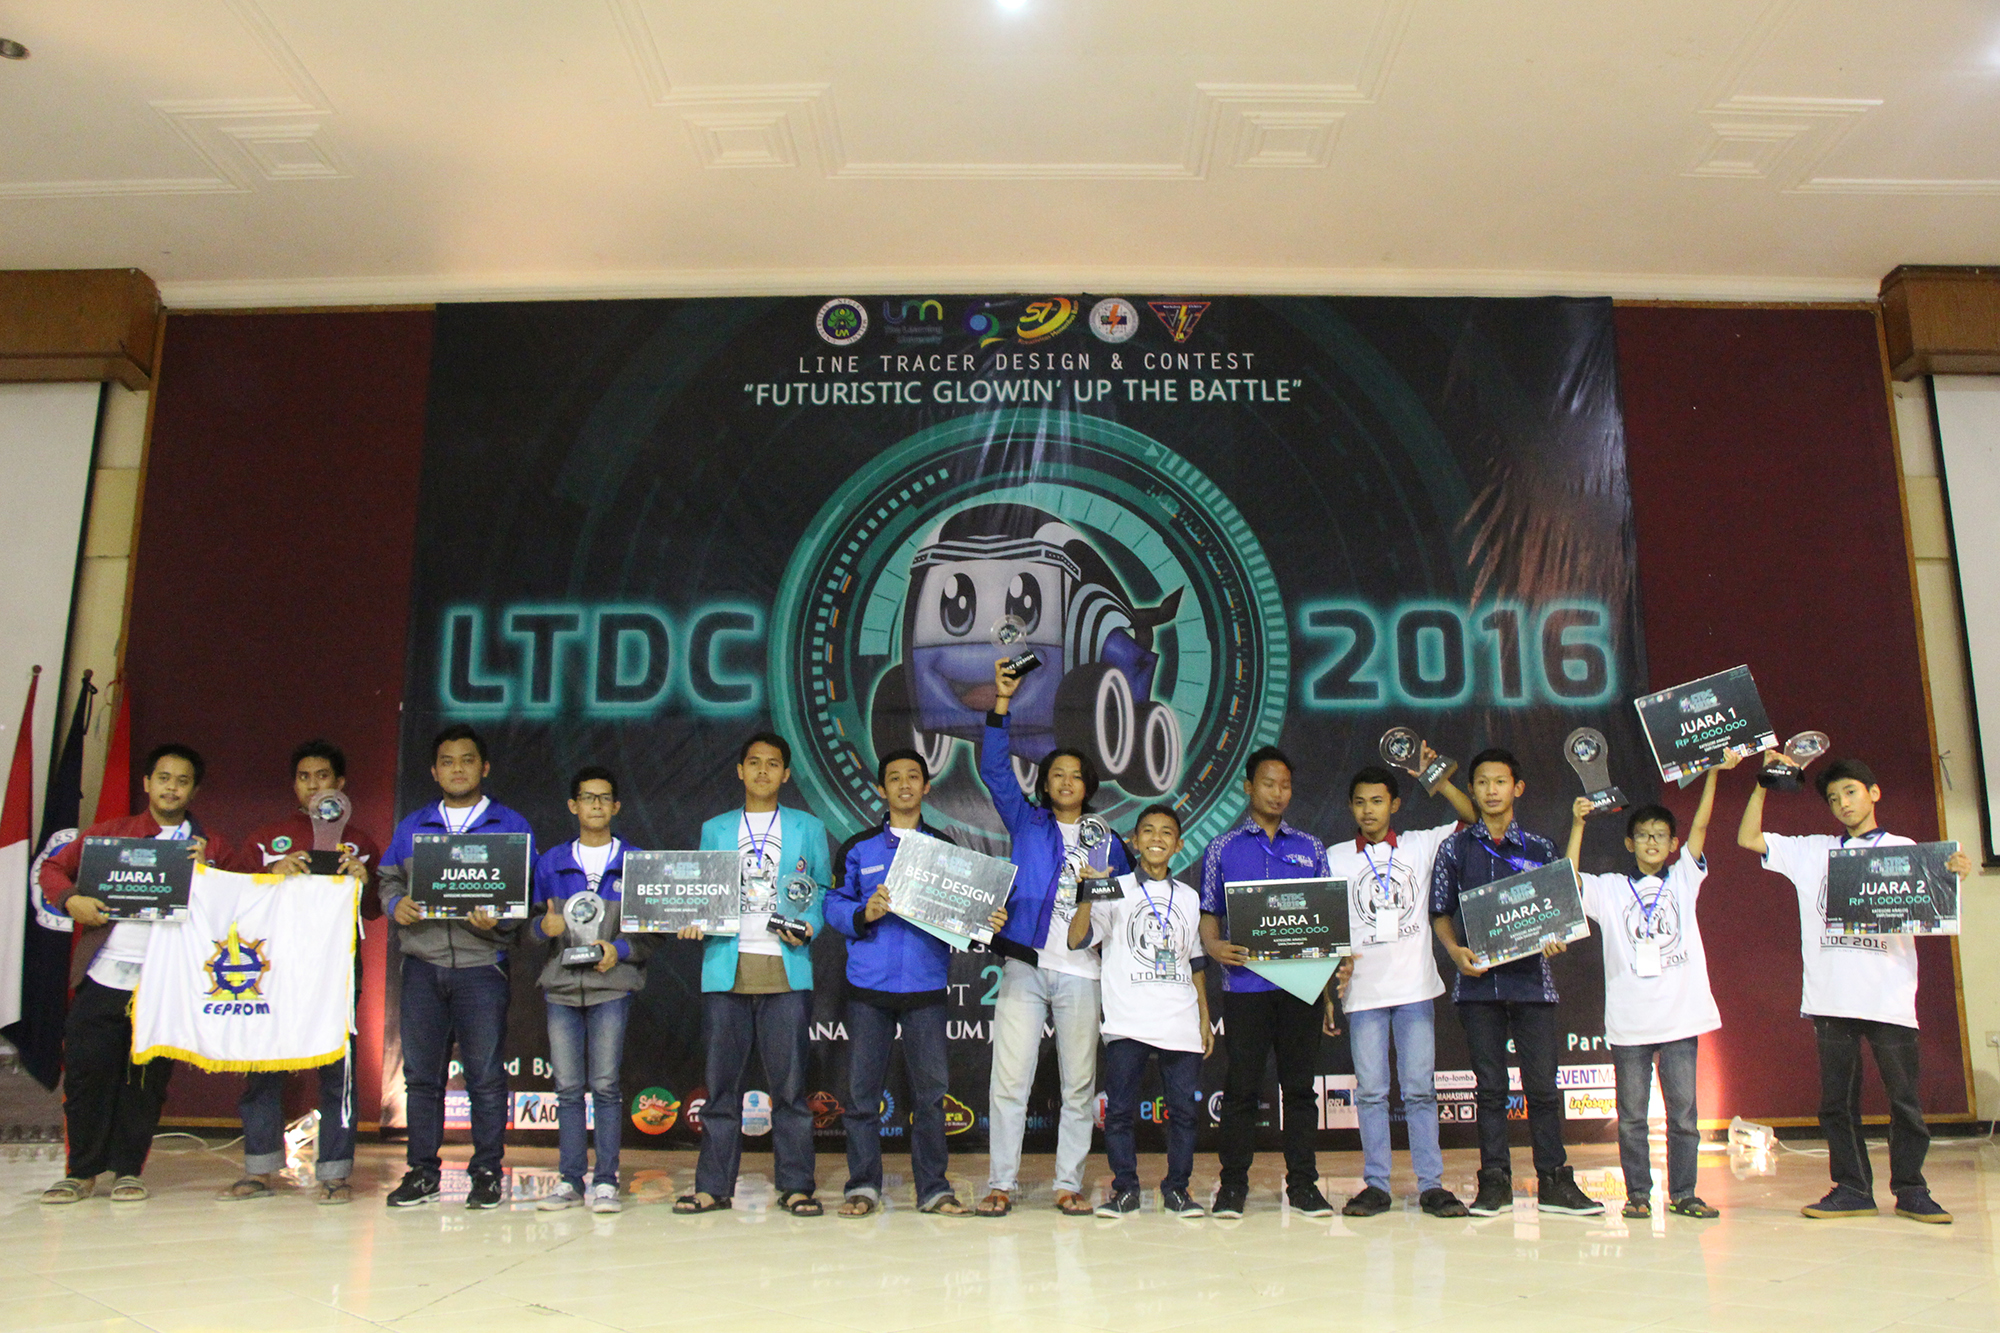 Line Tracer Design and Contest (LTDC) 2016